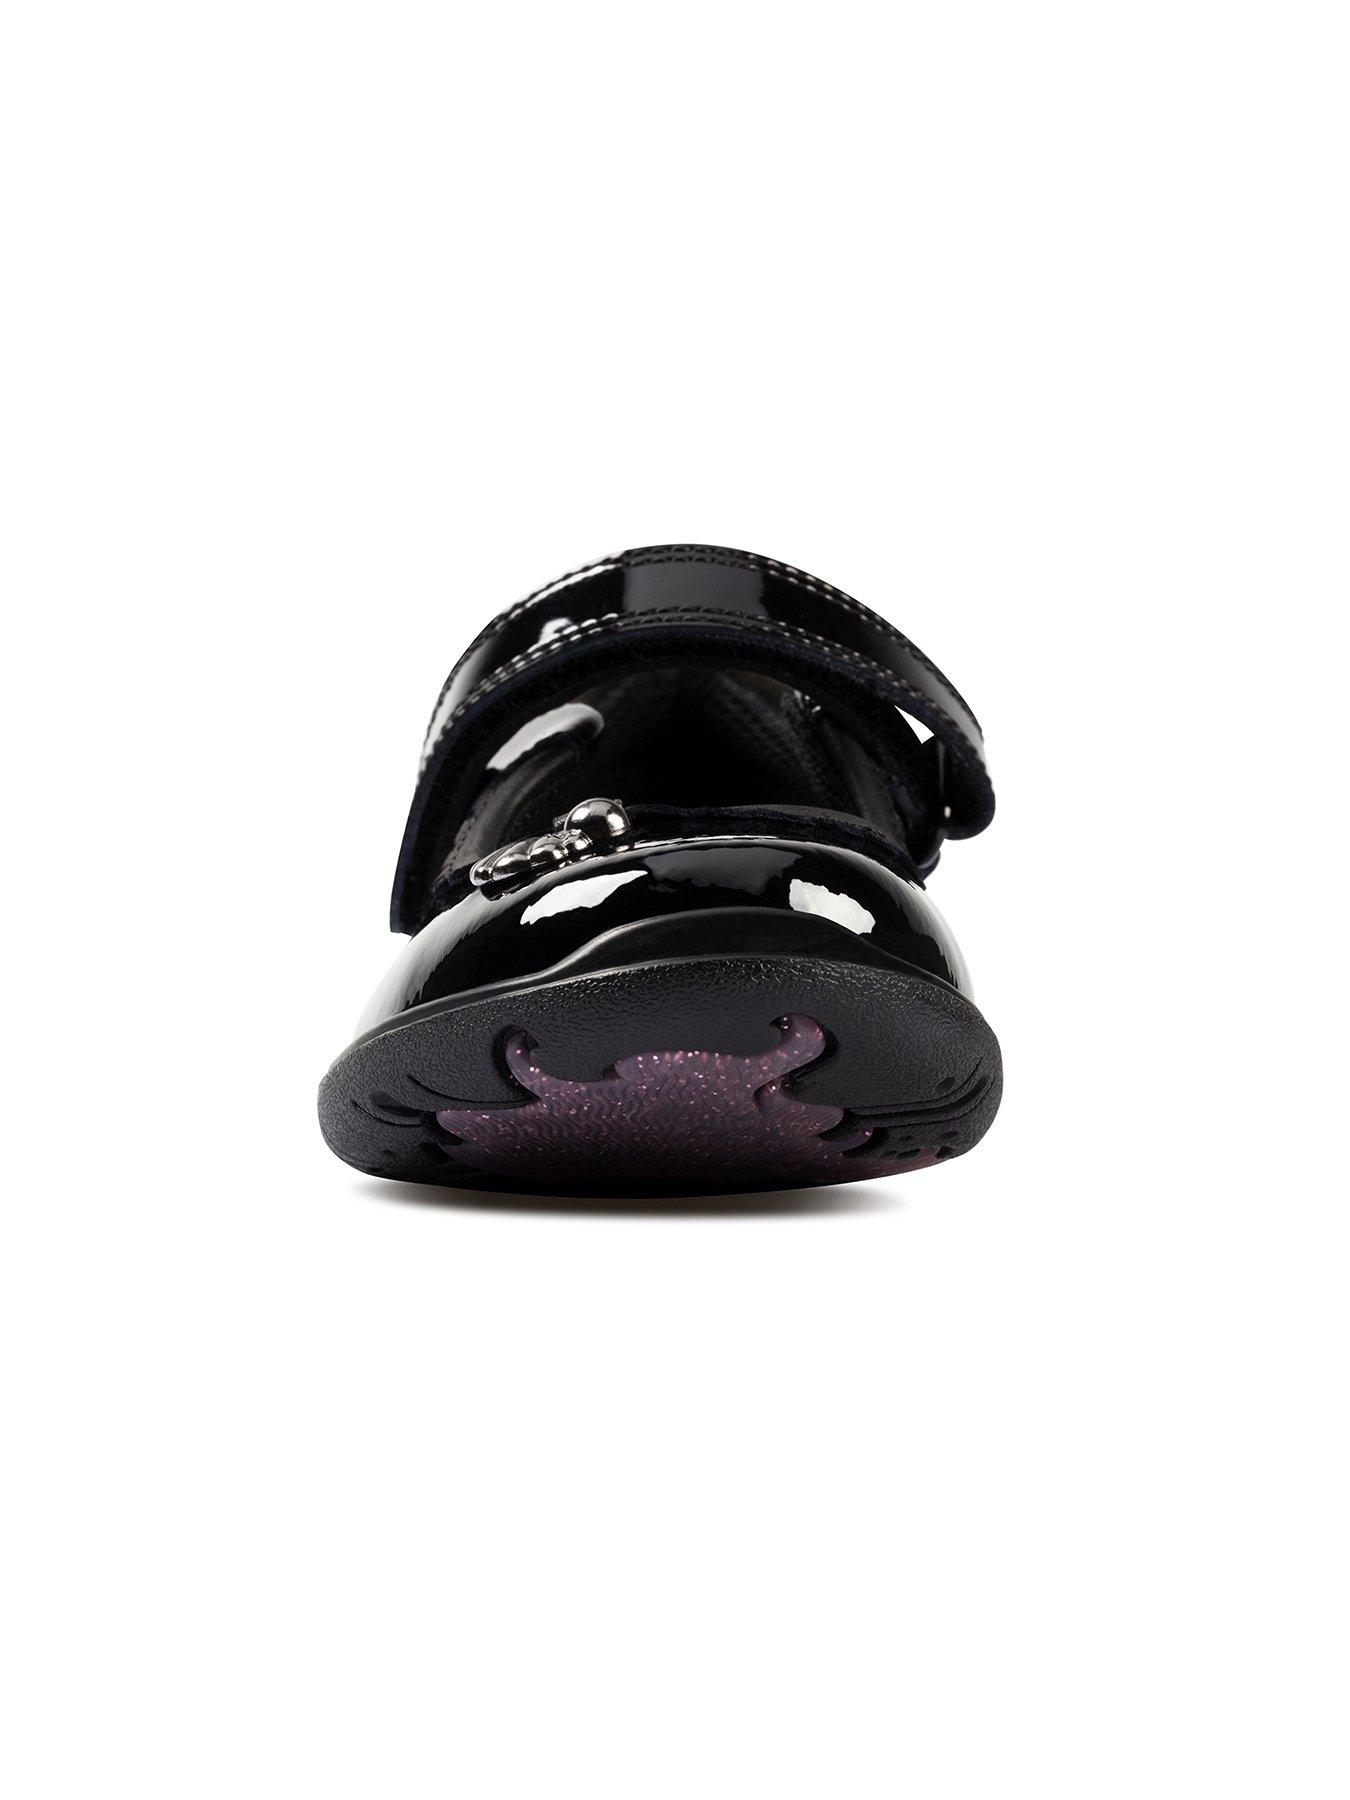  Toddler Sea Shimmer Mary Jane School Shoe - Black Patent